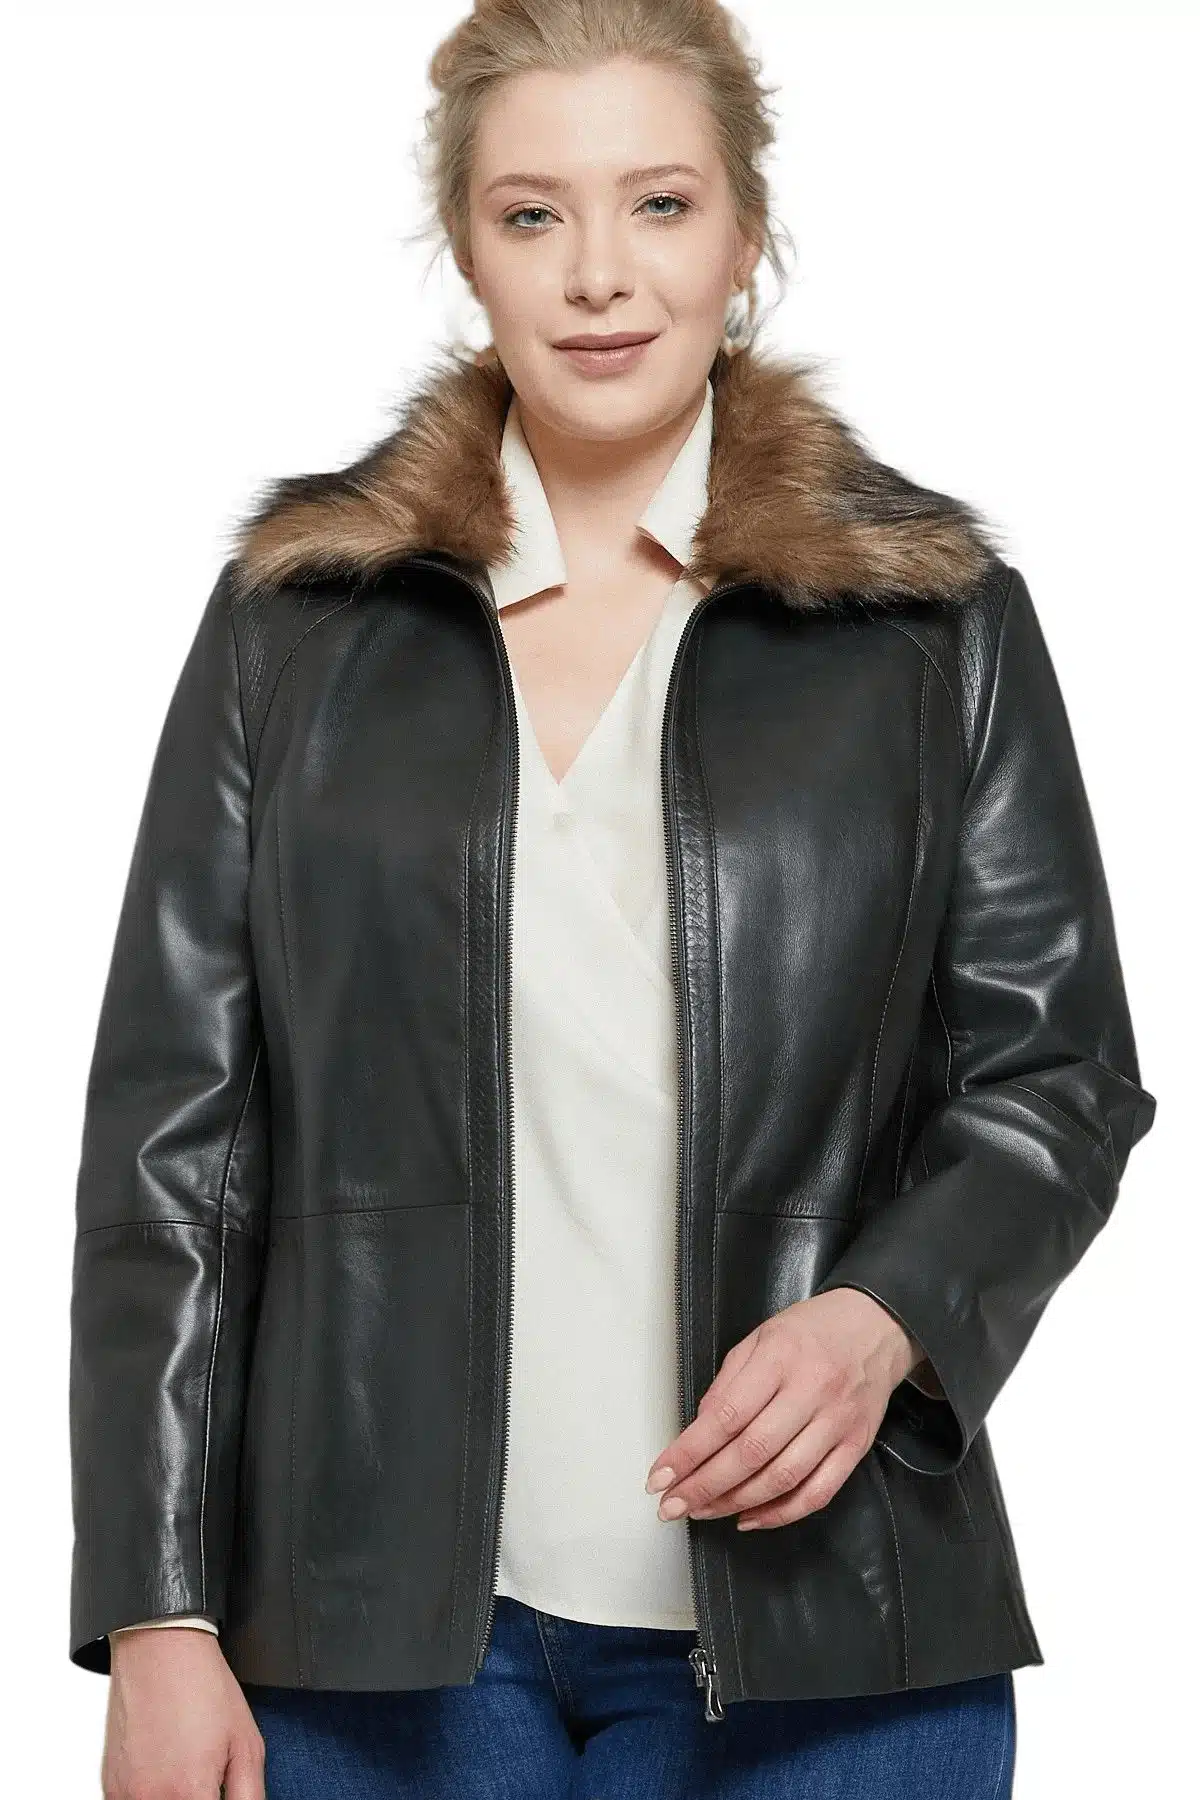 Indiana Fur Women’s Leather Jacket (1)